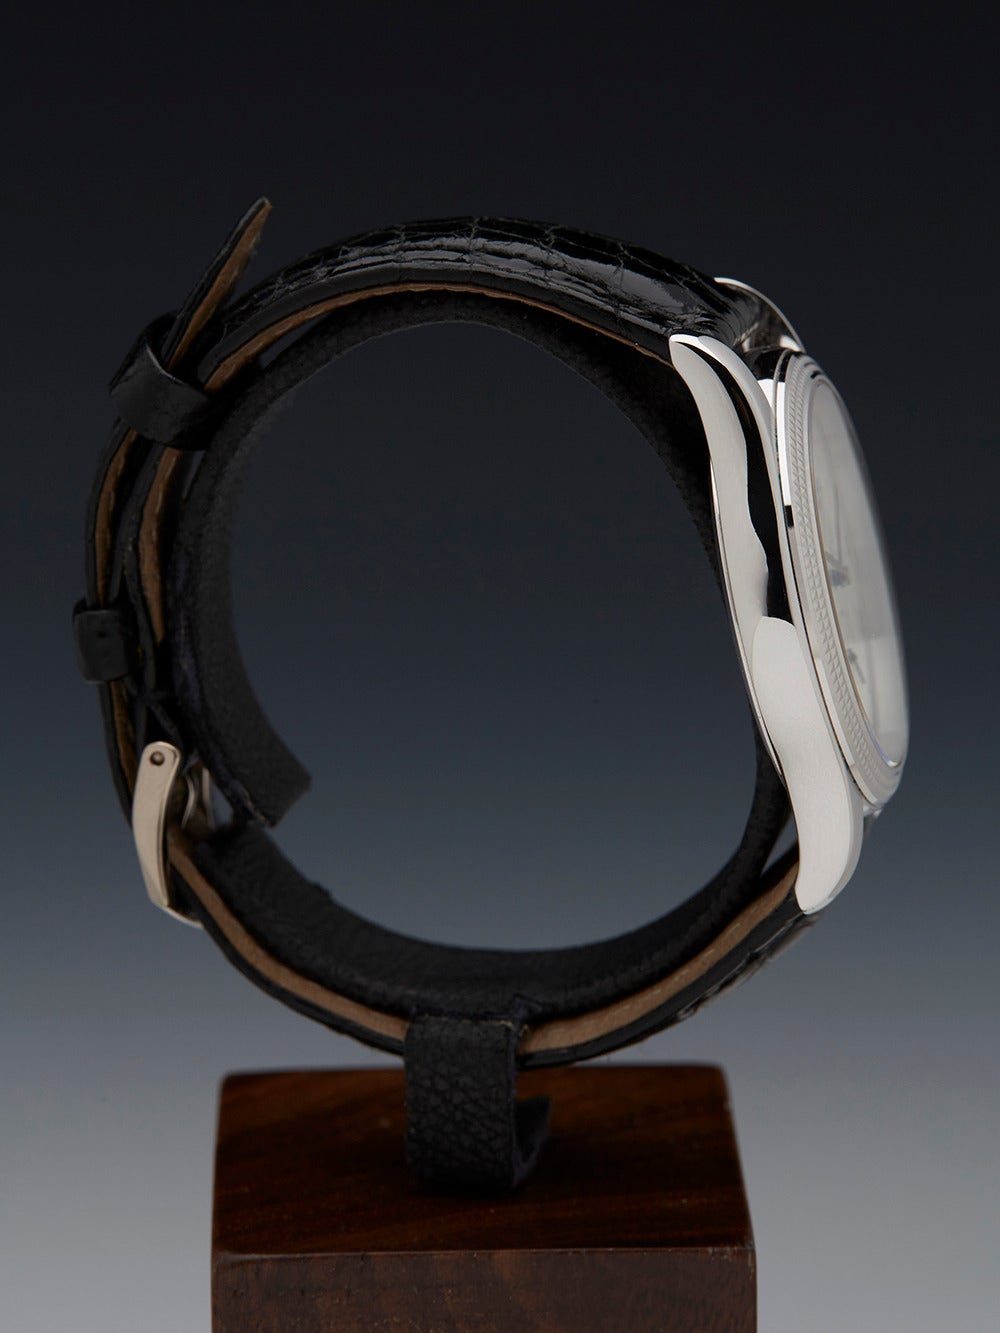 Patek Philippe White Gold Calatrava Wristwatch Ref 5115G-001 1